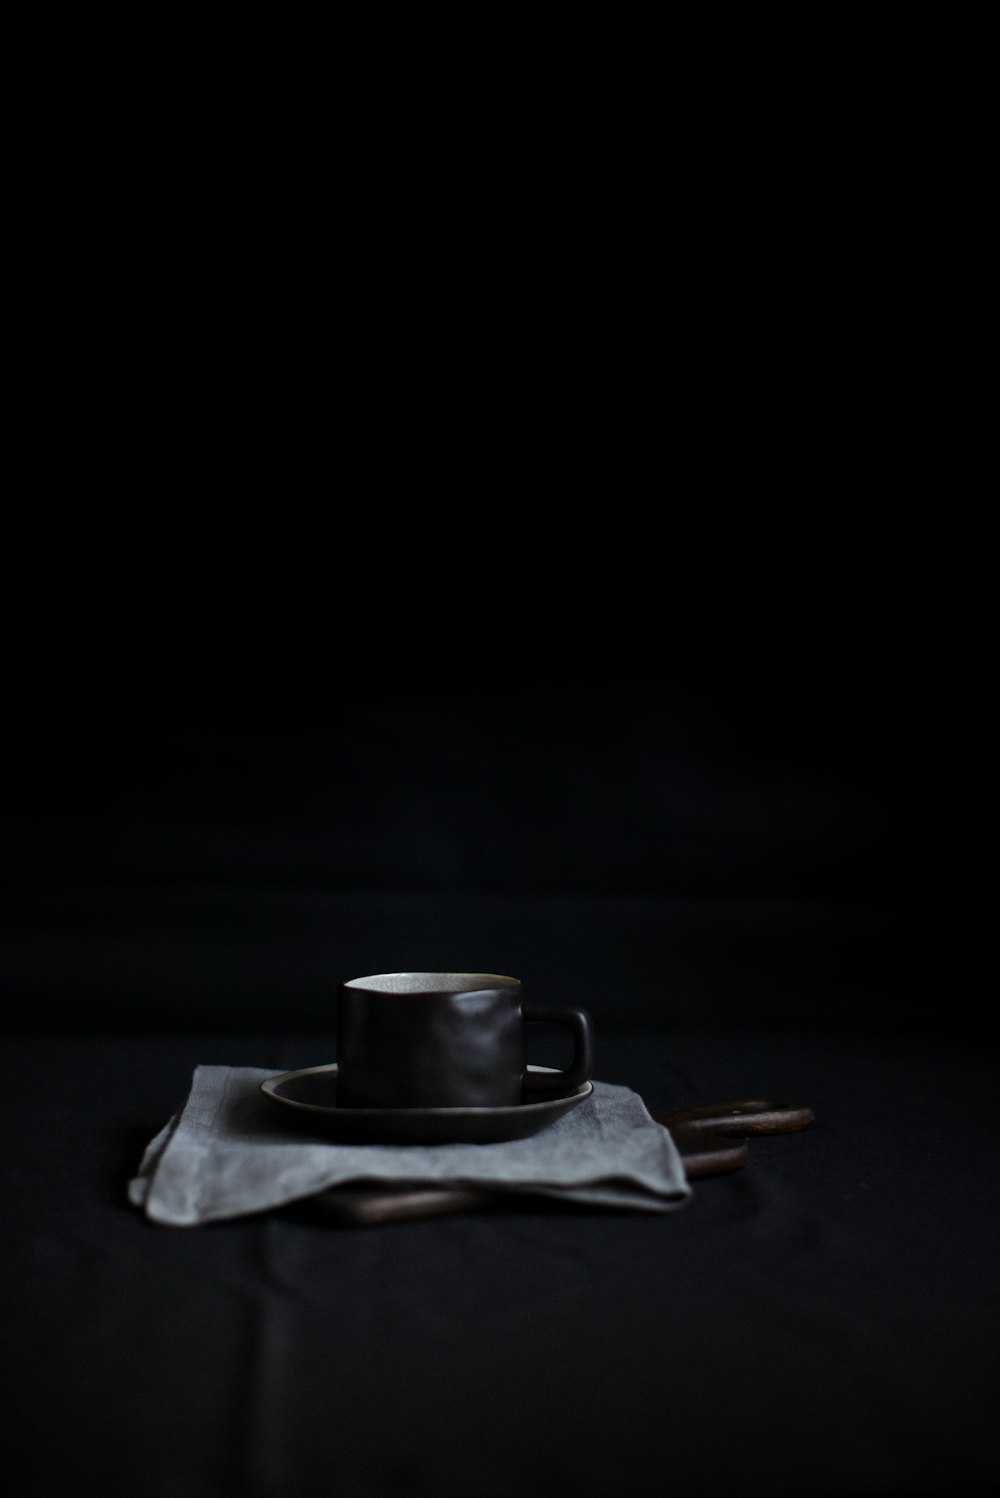 black mug and saucer on top of white textile